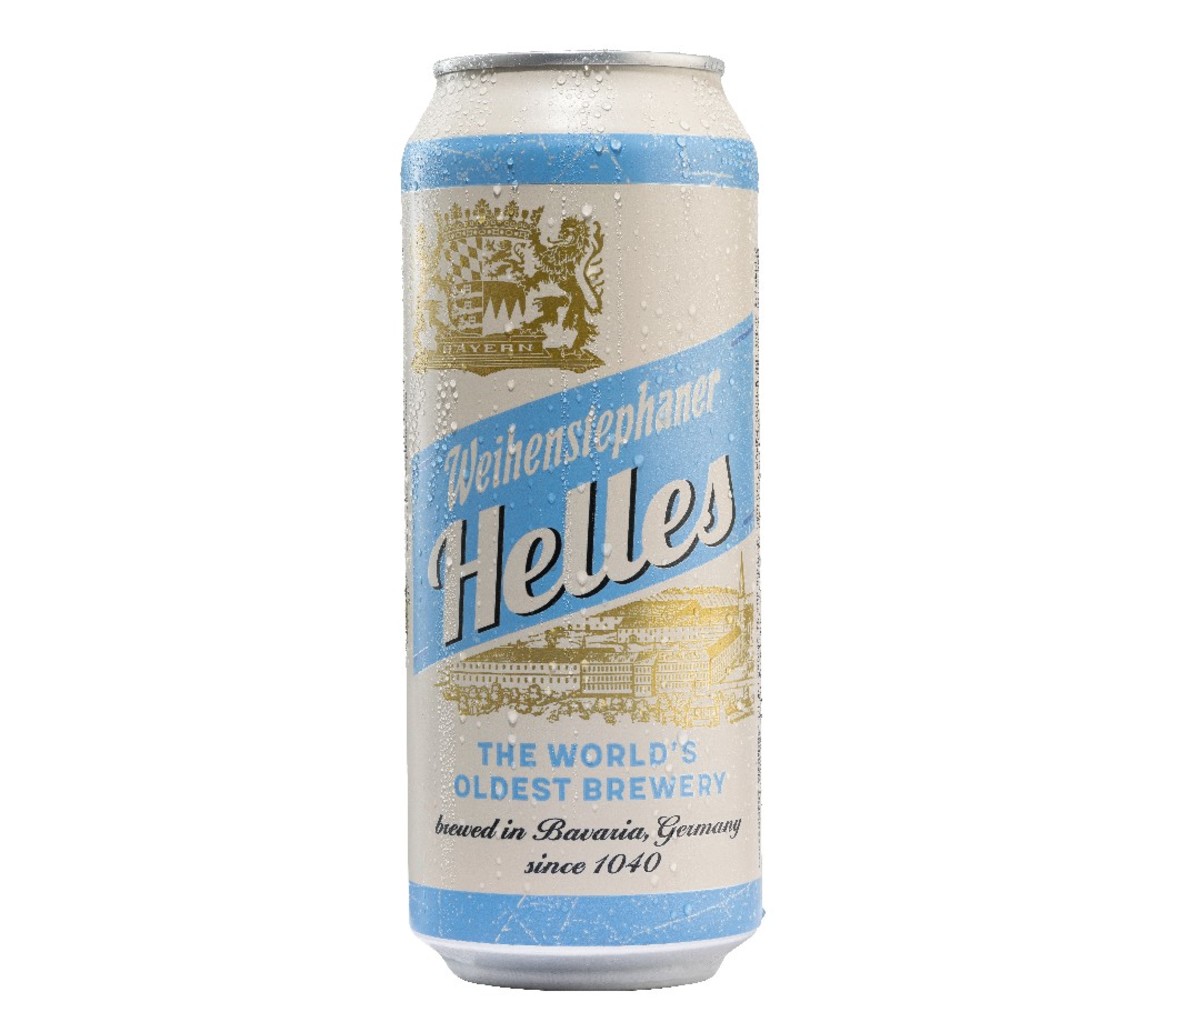 A can of Weihenstephaner Helles beer.